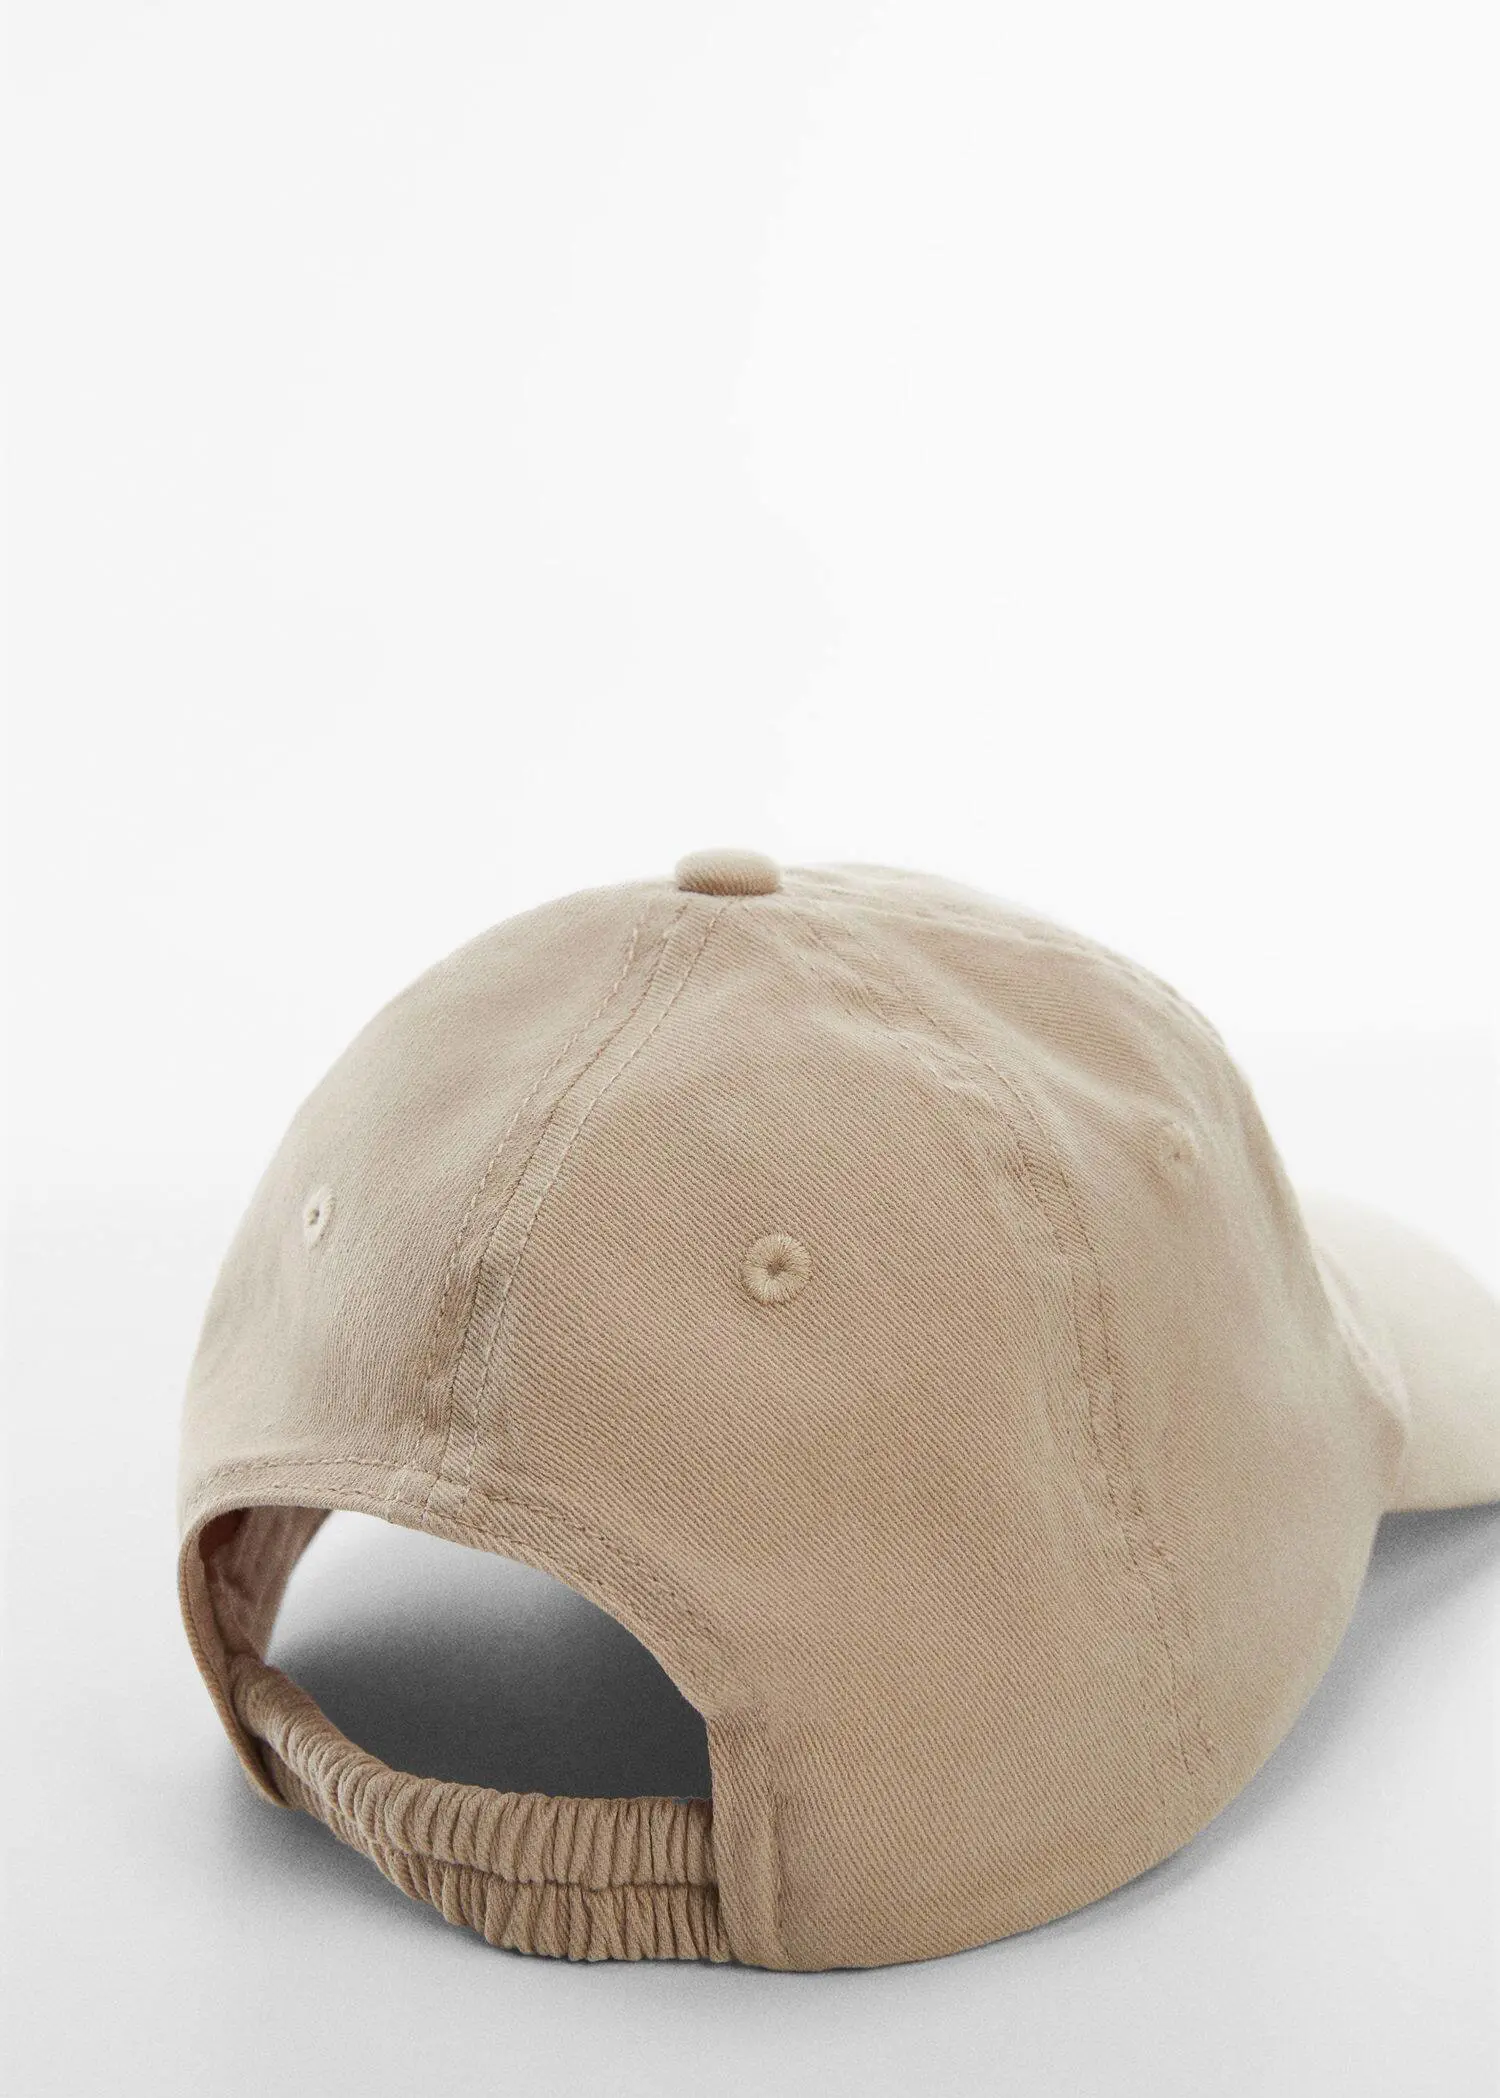 Mango Organic cotton cap. a close-up of the back of a baseball cap. 